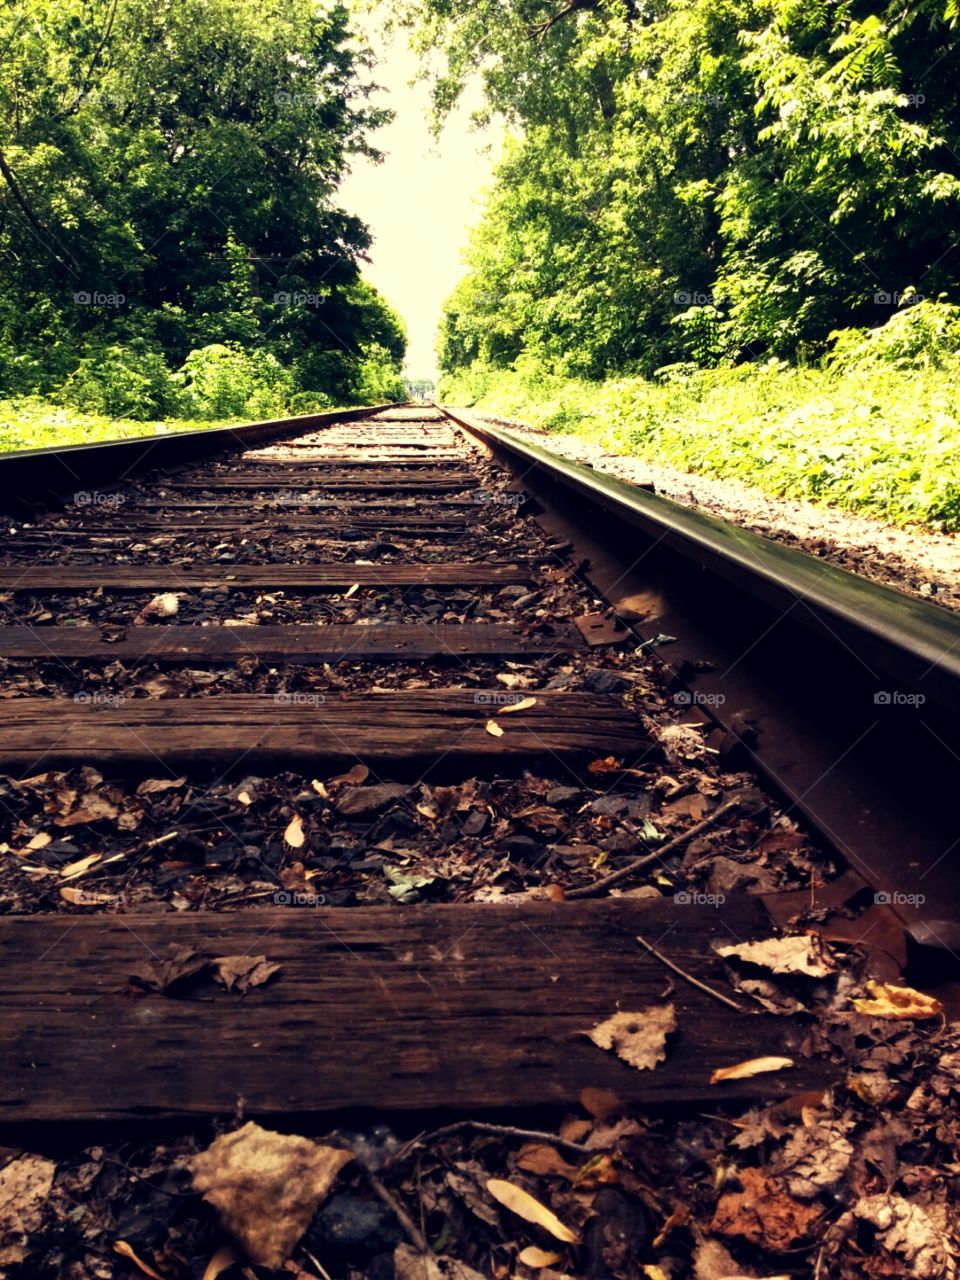 Follow the tracks